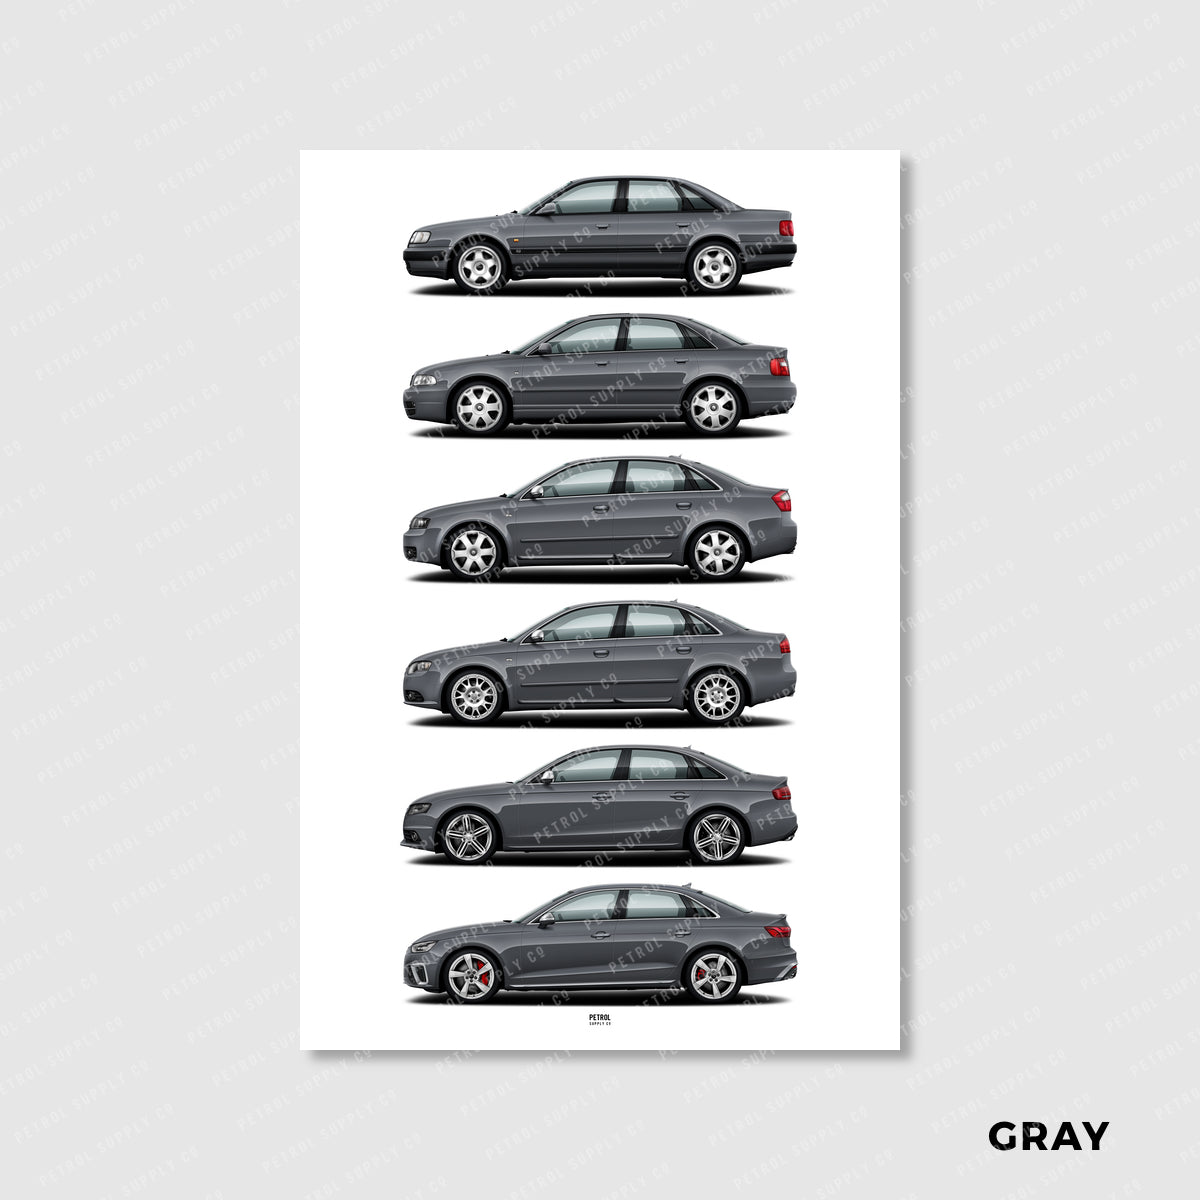 Audi S4 Poster Evolution Generations - gray